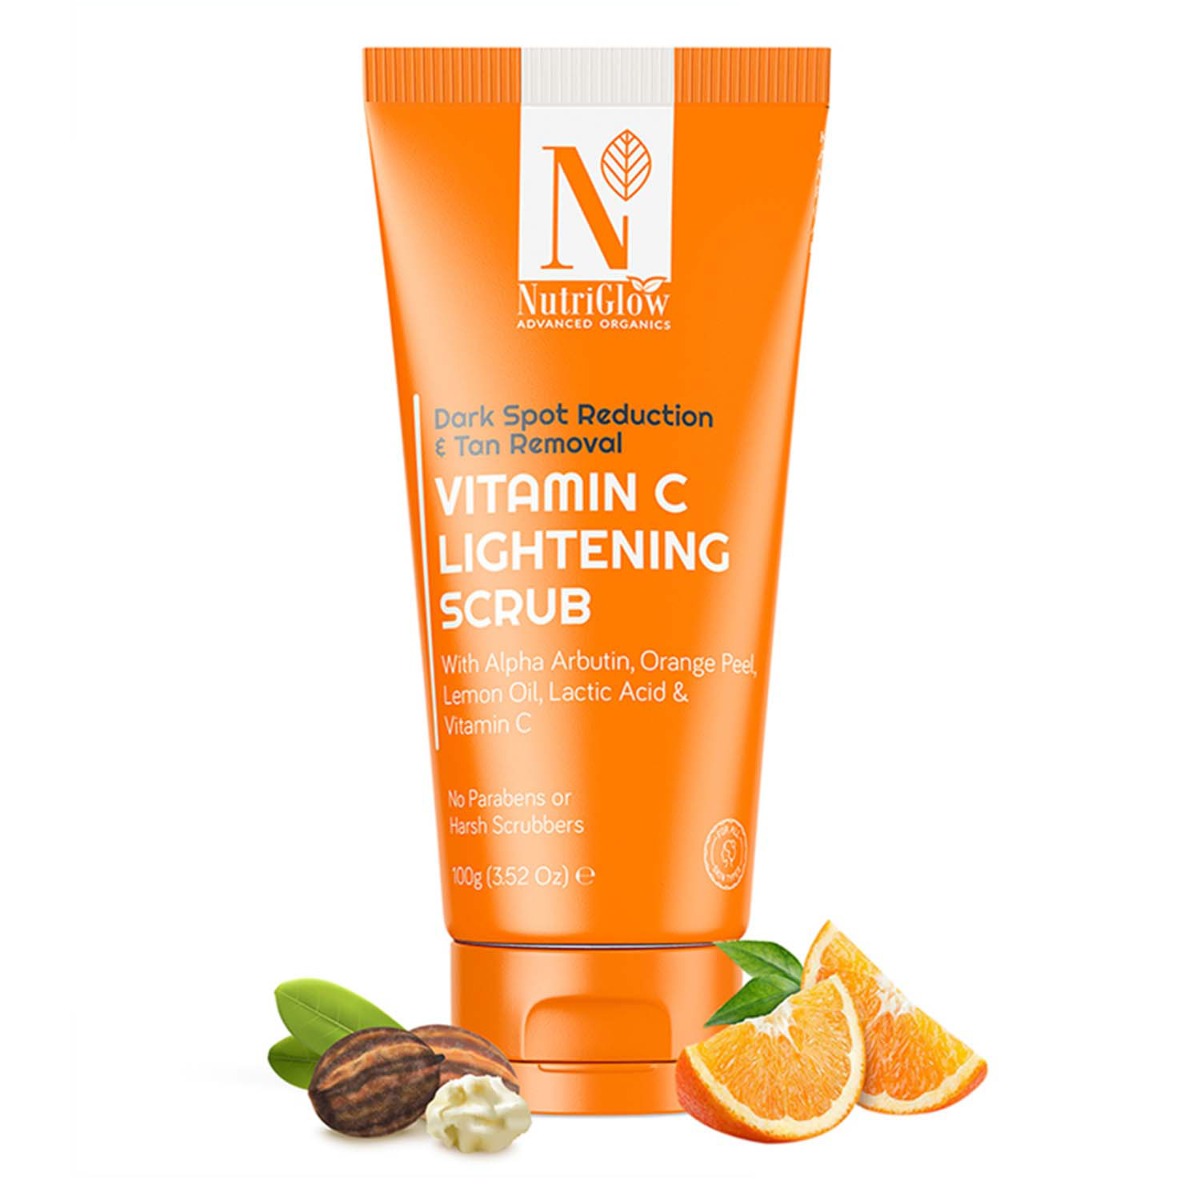 NutriGlow Advanced Organics Vitamin C Lightening Scrub For Exfoliation, Acne Control With Orange Peel Scrub, 100gm